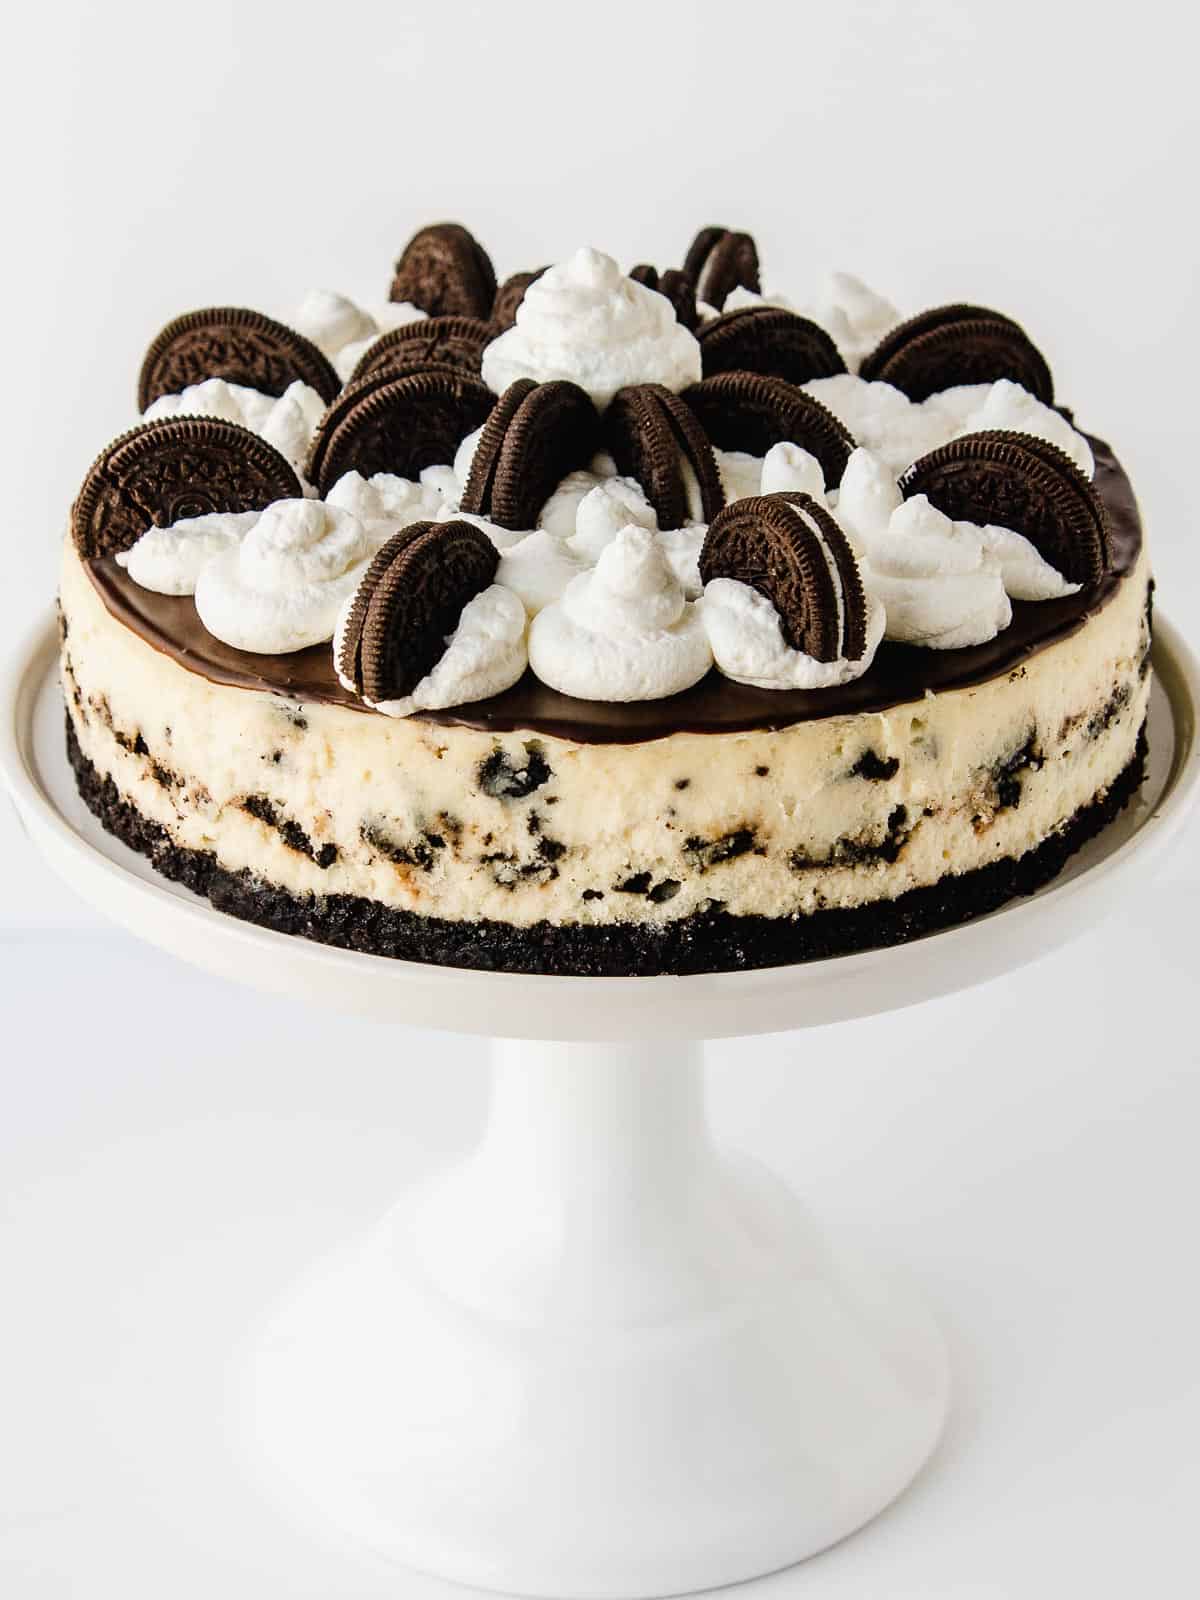 Oreo Cheesecake on a cake stand.